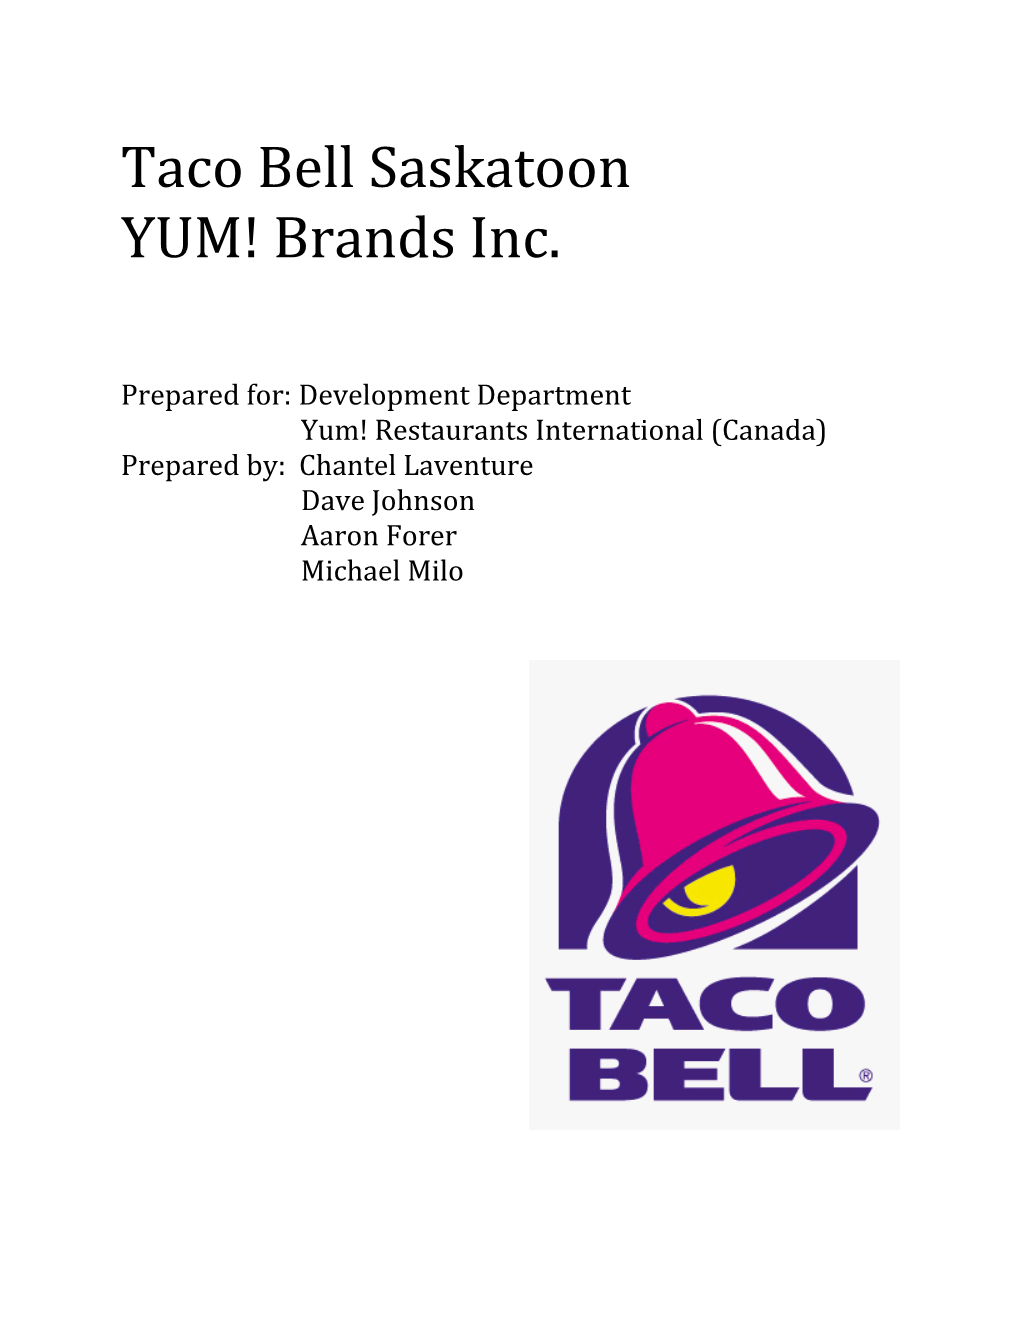 Taco Bell Saskatoon YUM! Brands